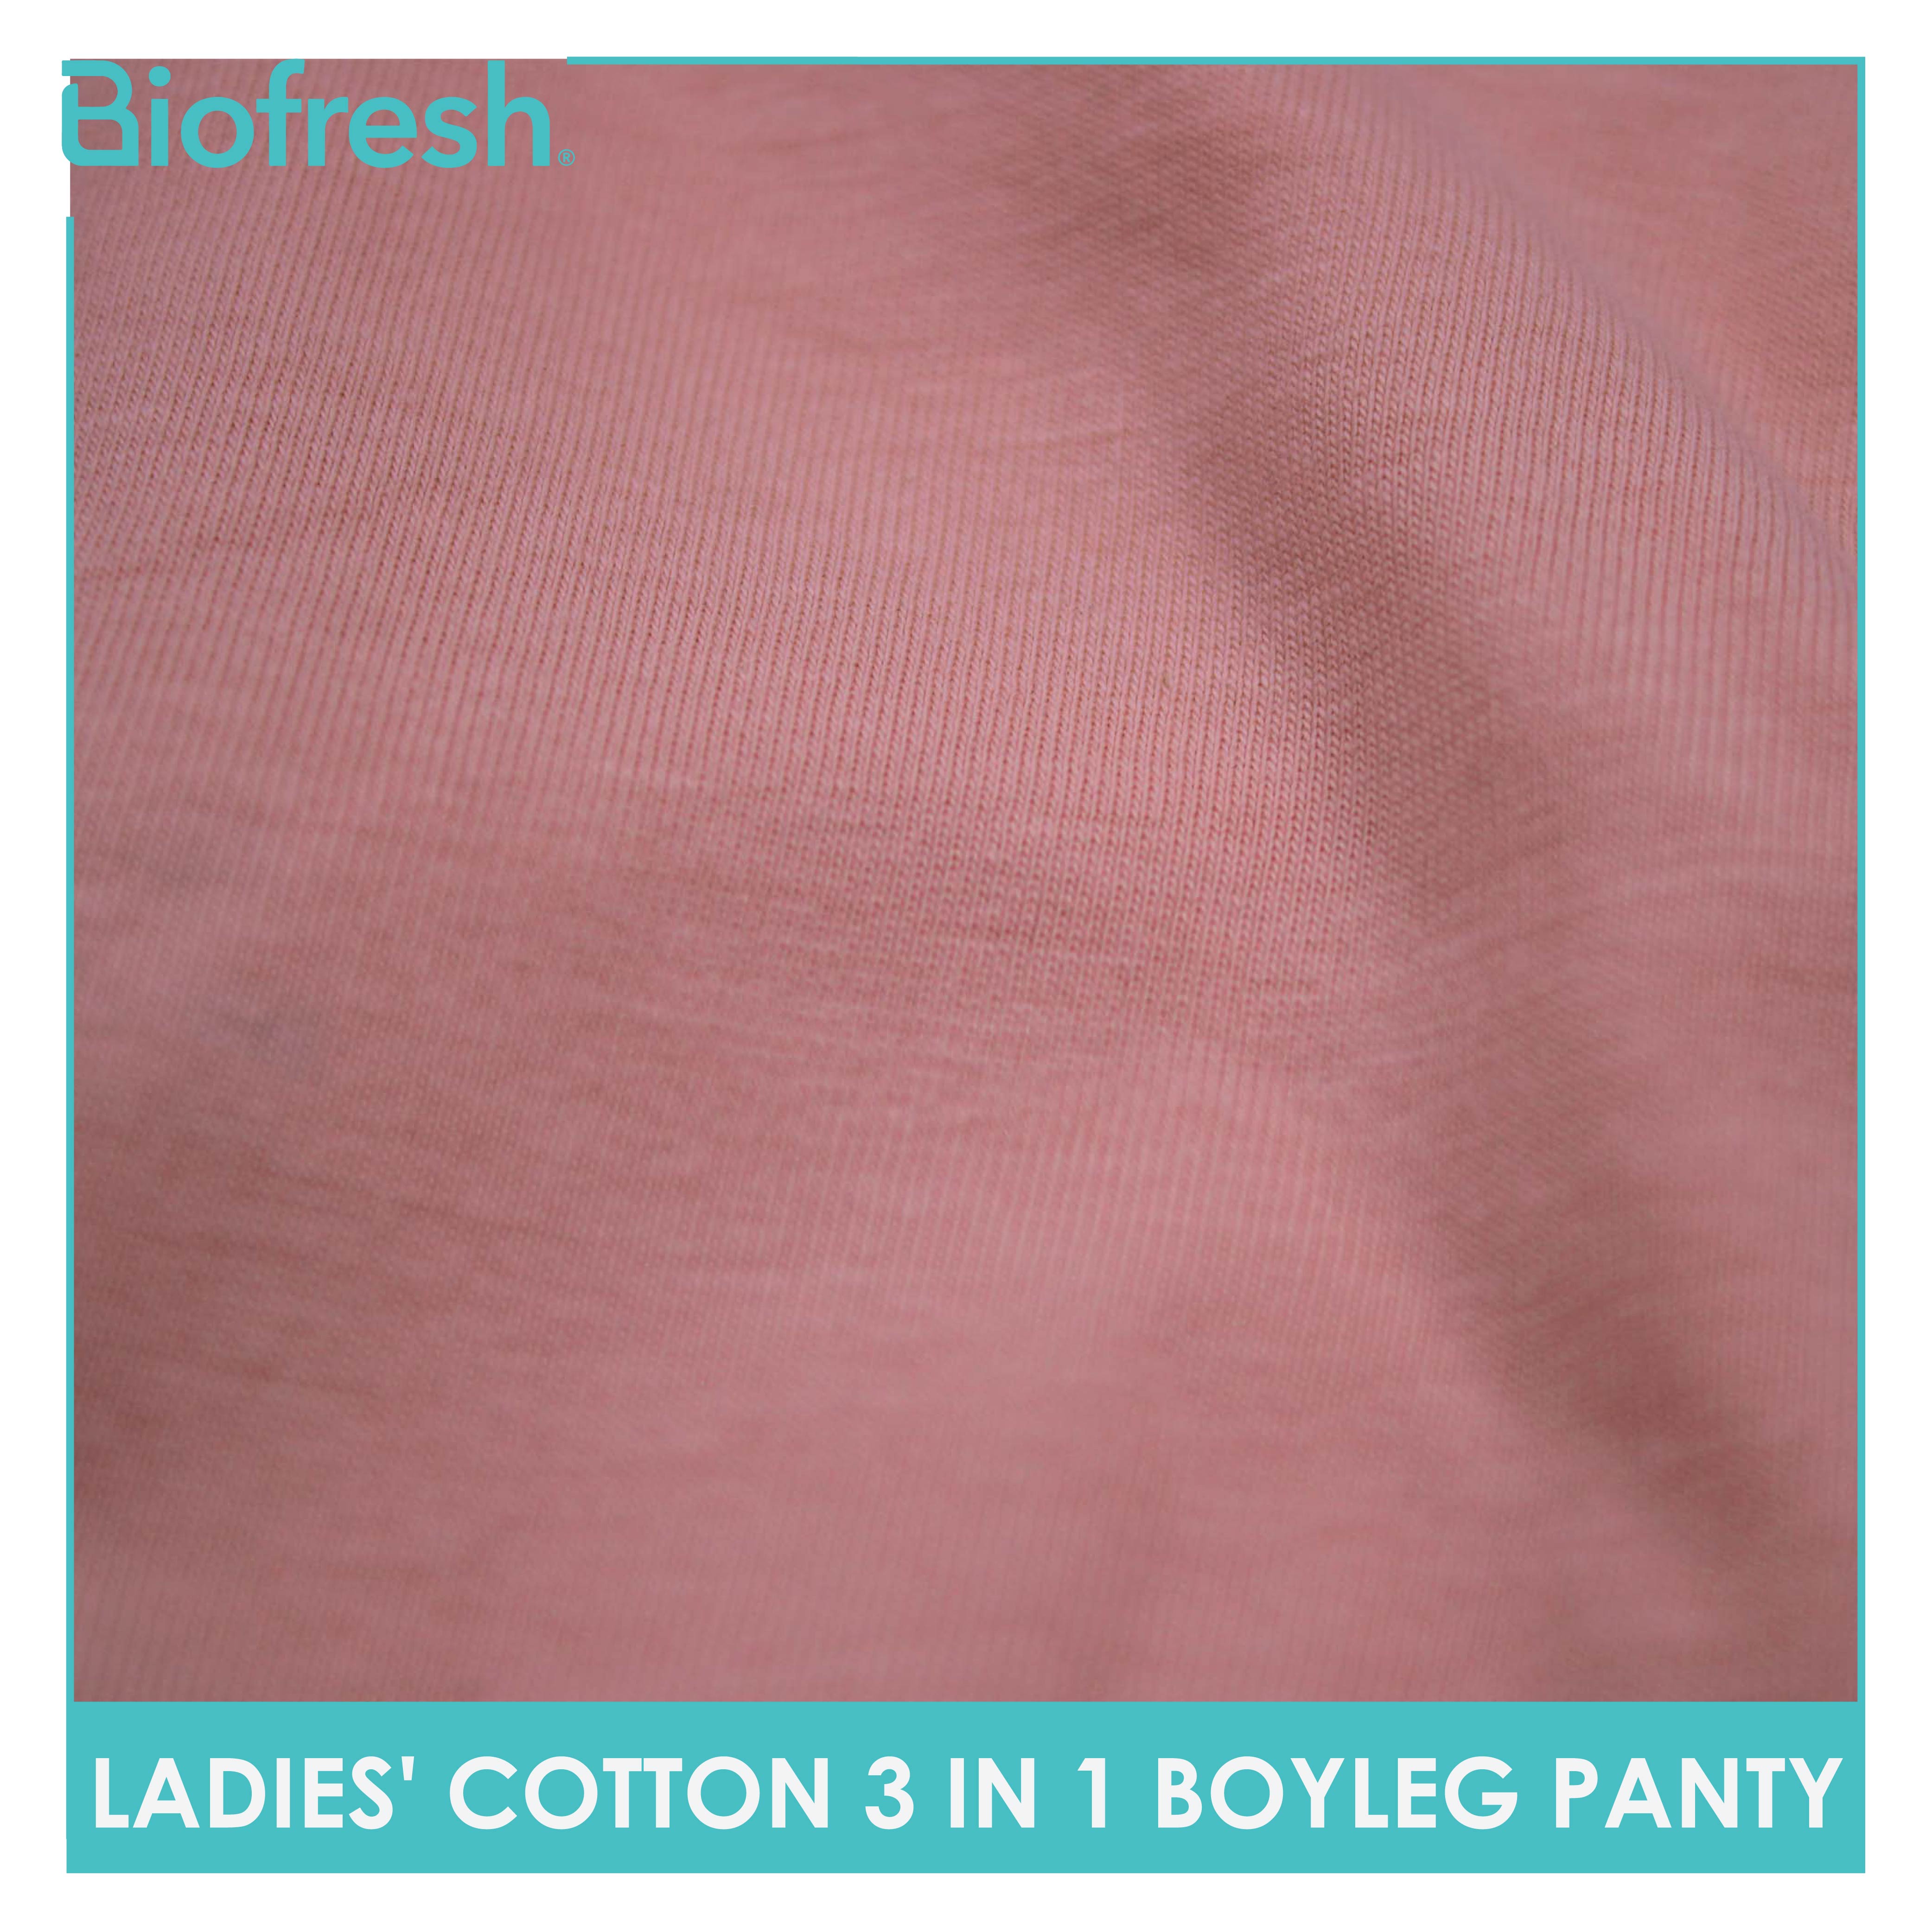 Biofresh Ladies' Antimicrobial Cotton Boyleg Panty 3 pieces in a pack  ULPBG13